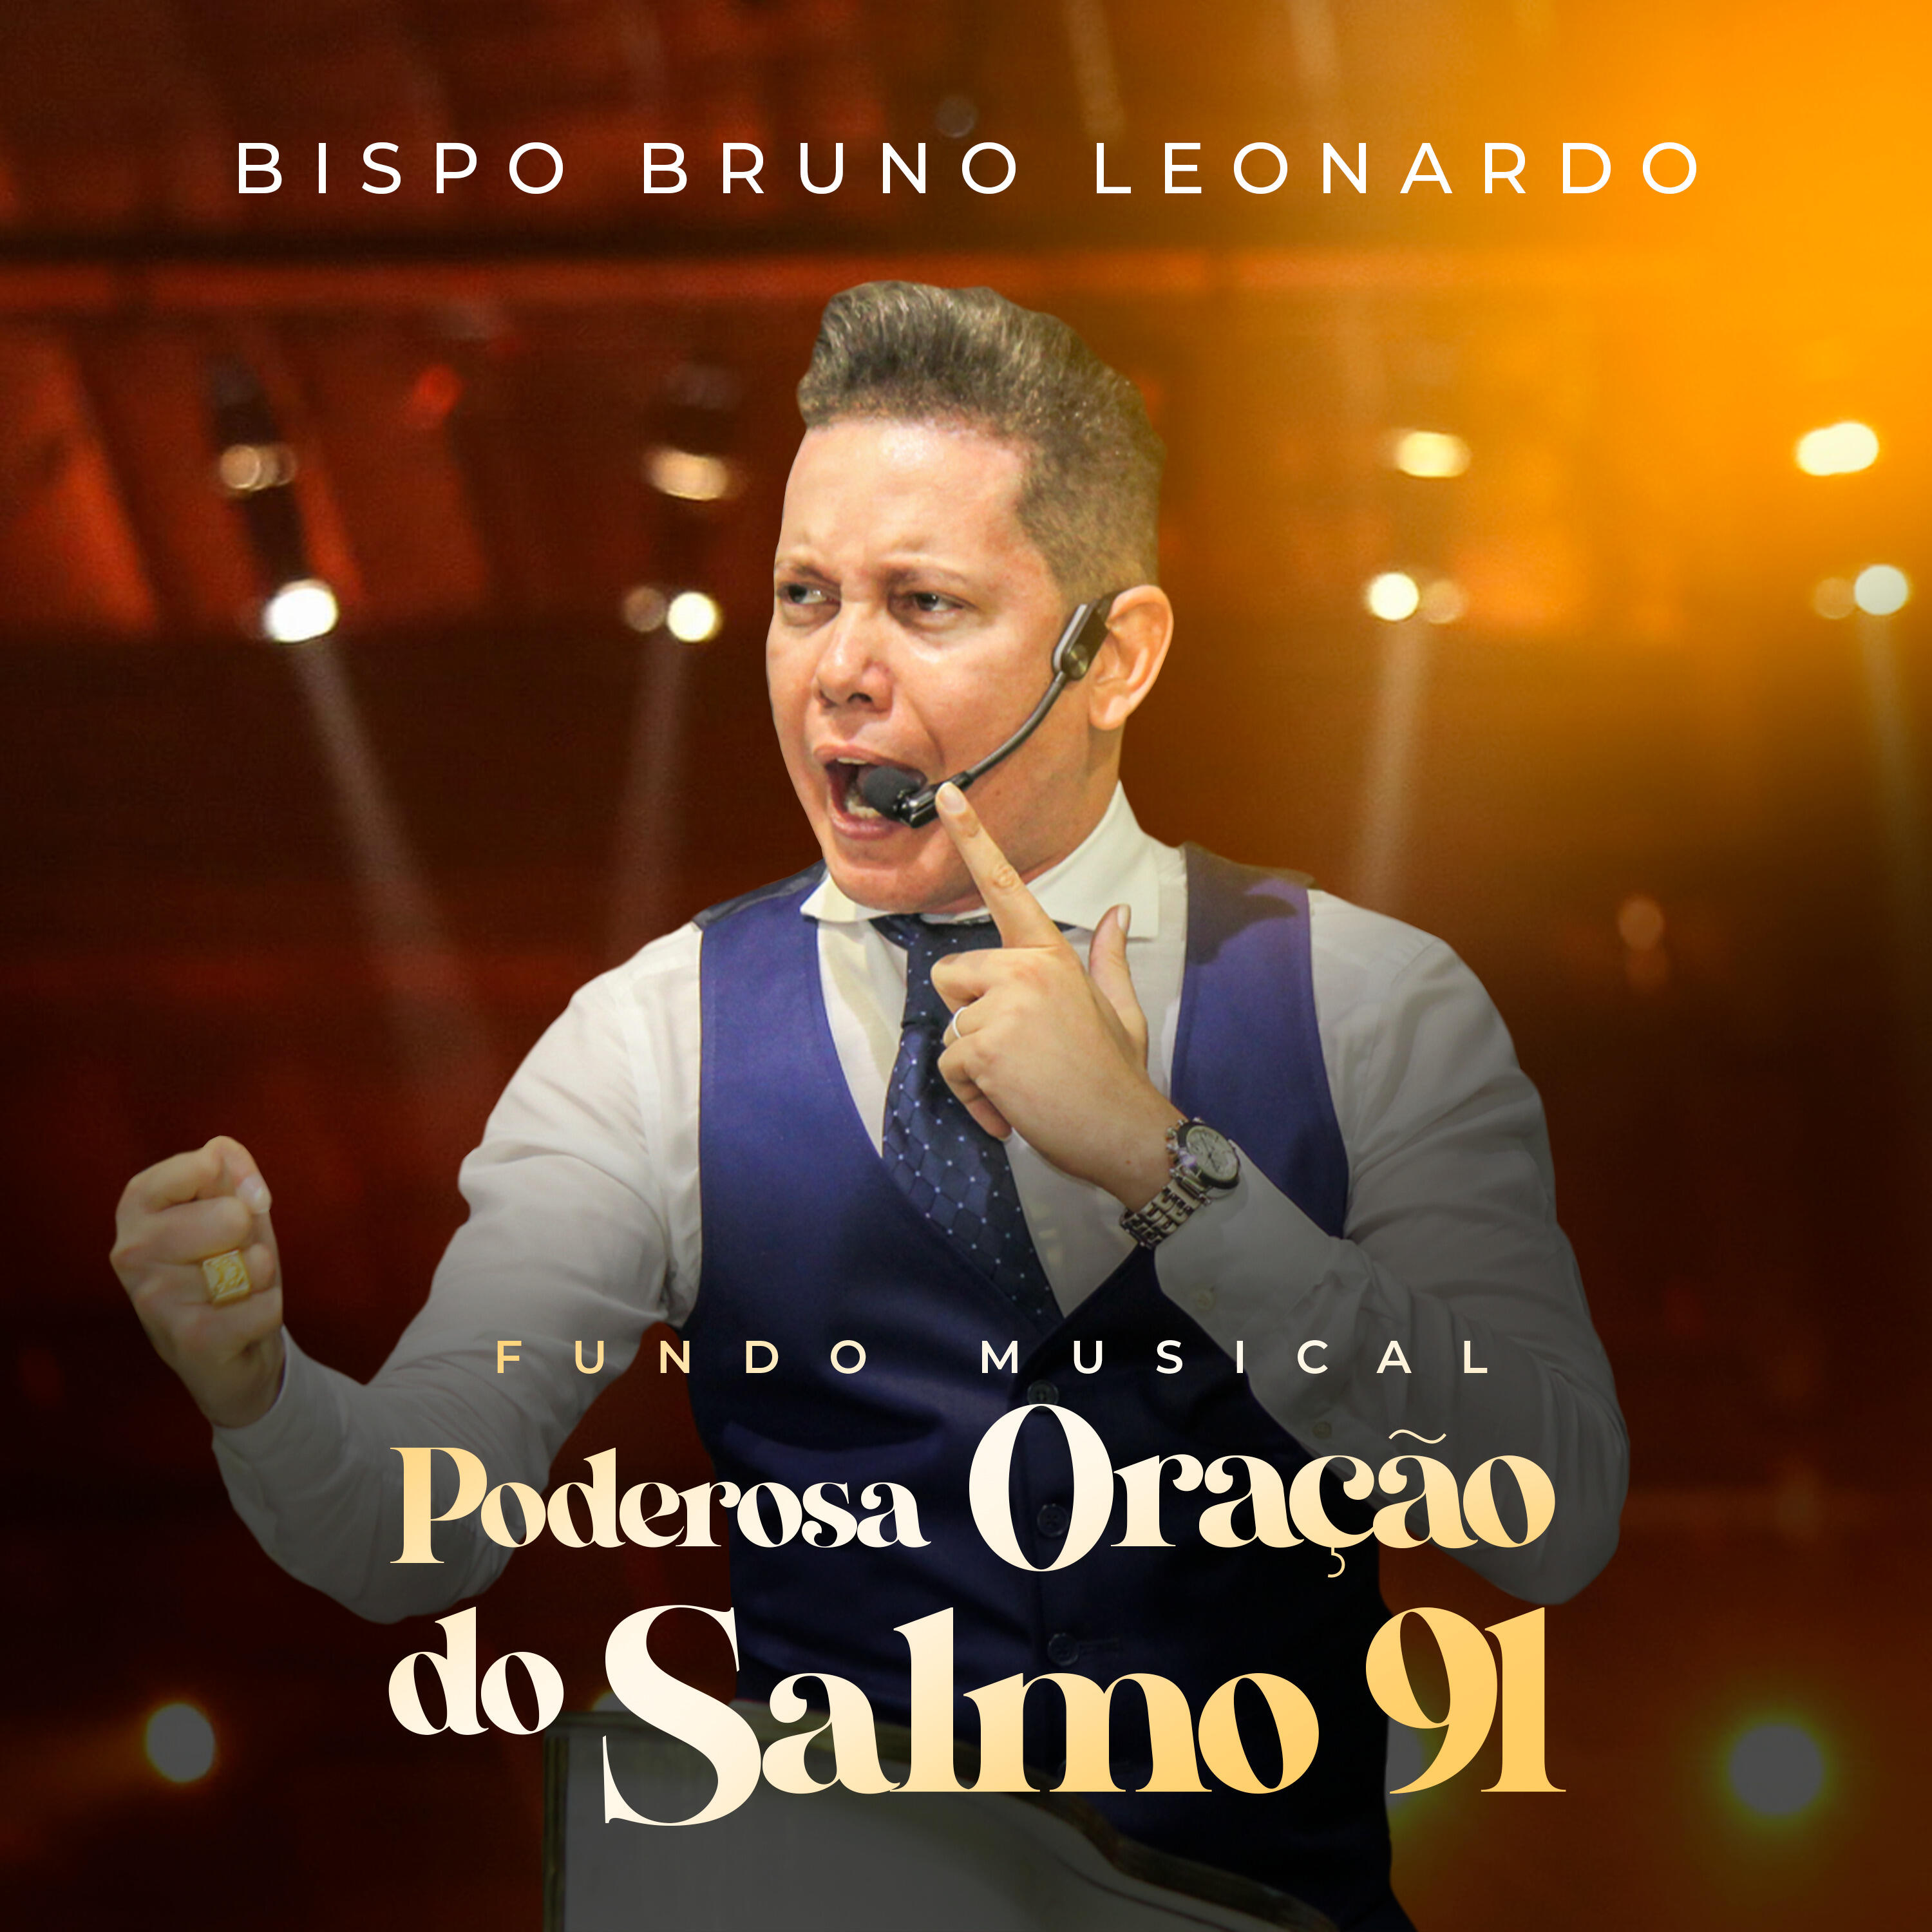 Bispo Bruno Leonardo 06/10